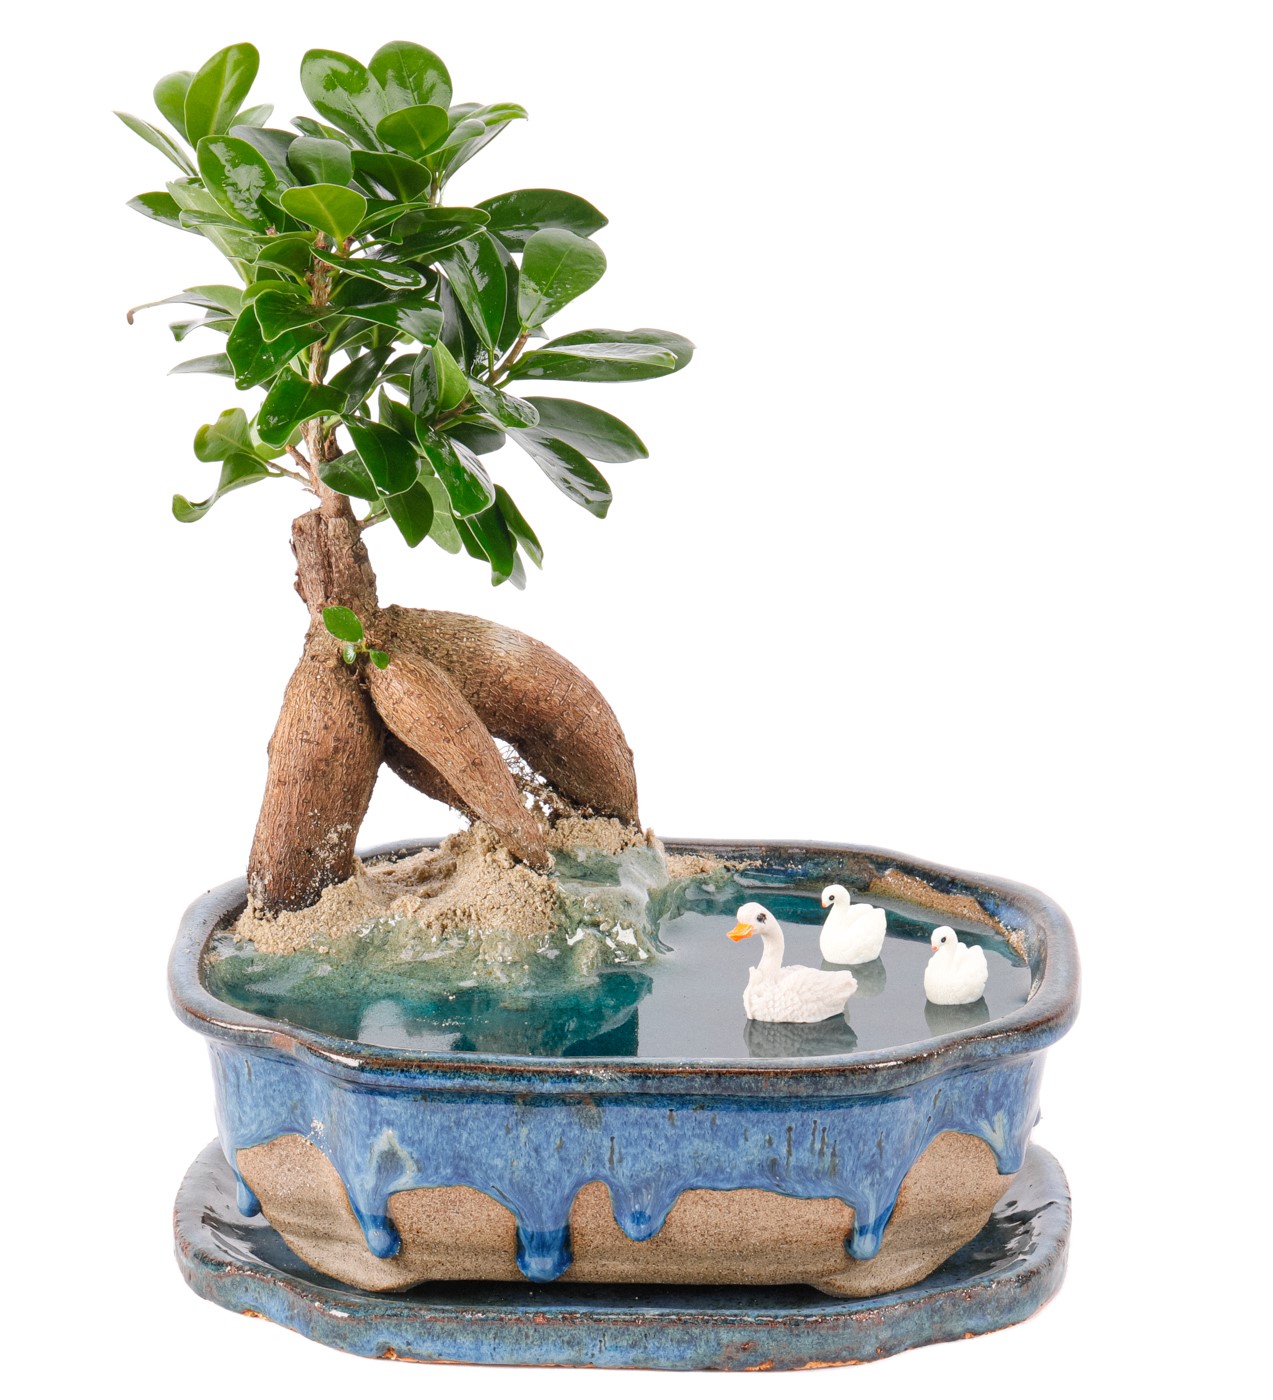 Art of Ceramic Series - Ficus Ginseng Bonsai Teraryum - 2